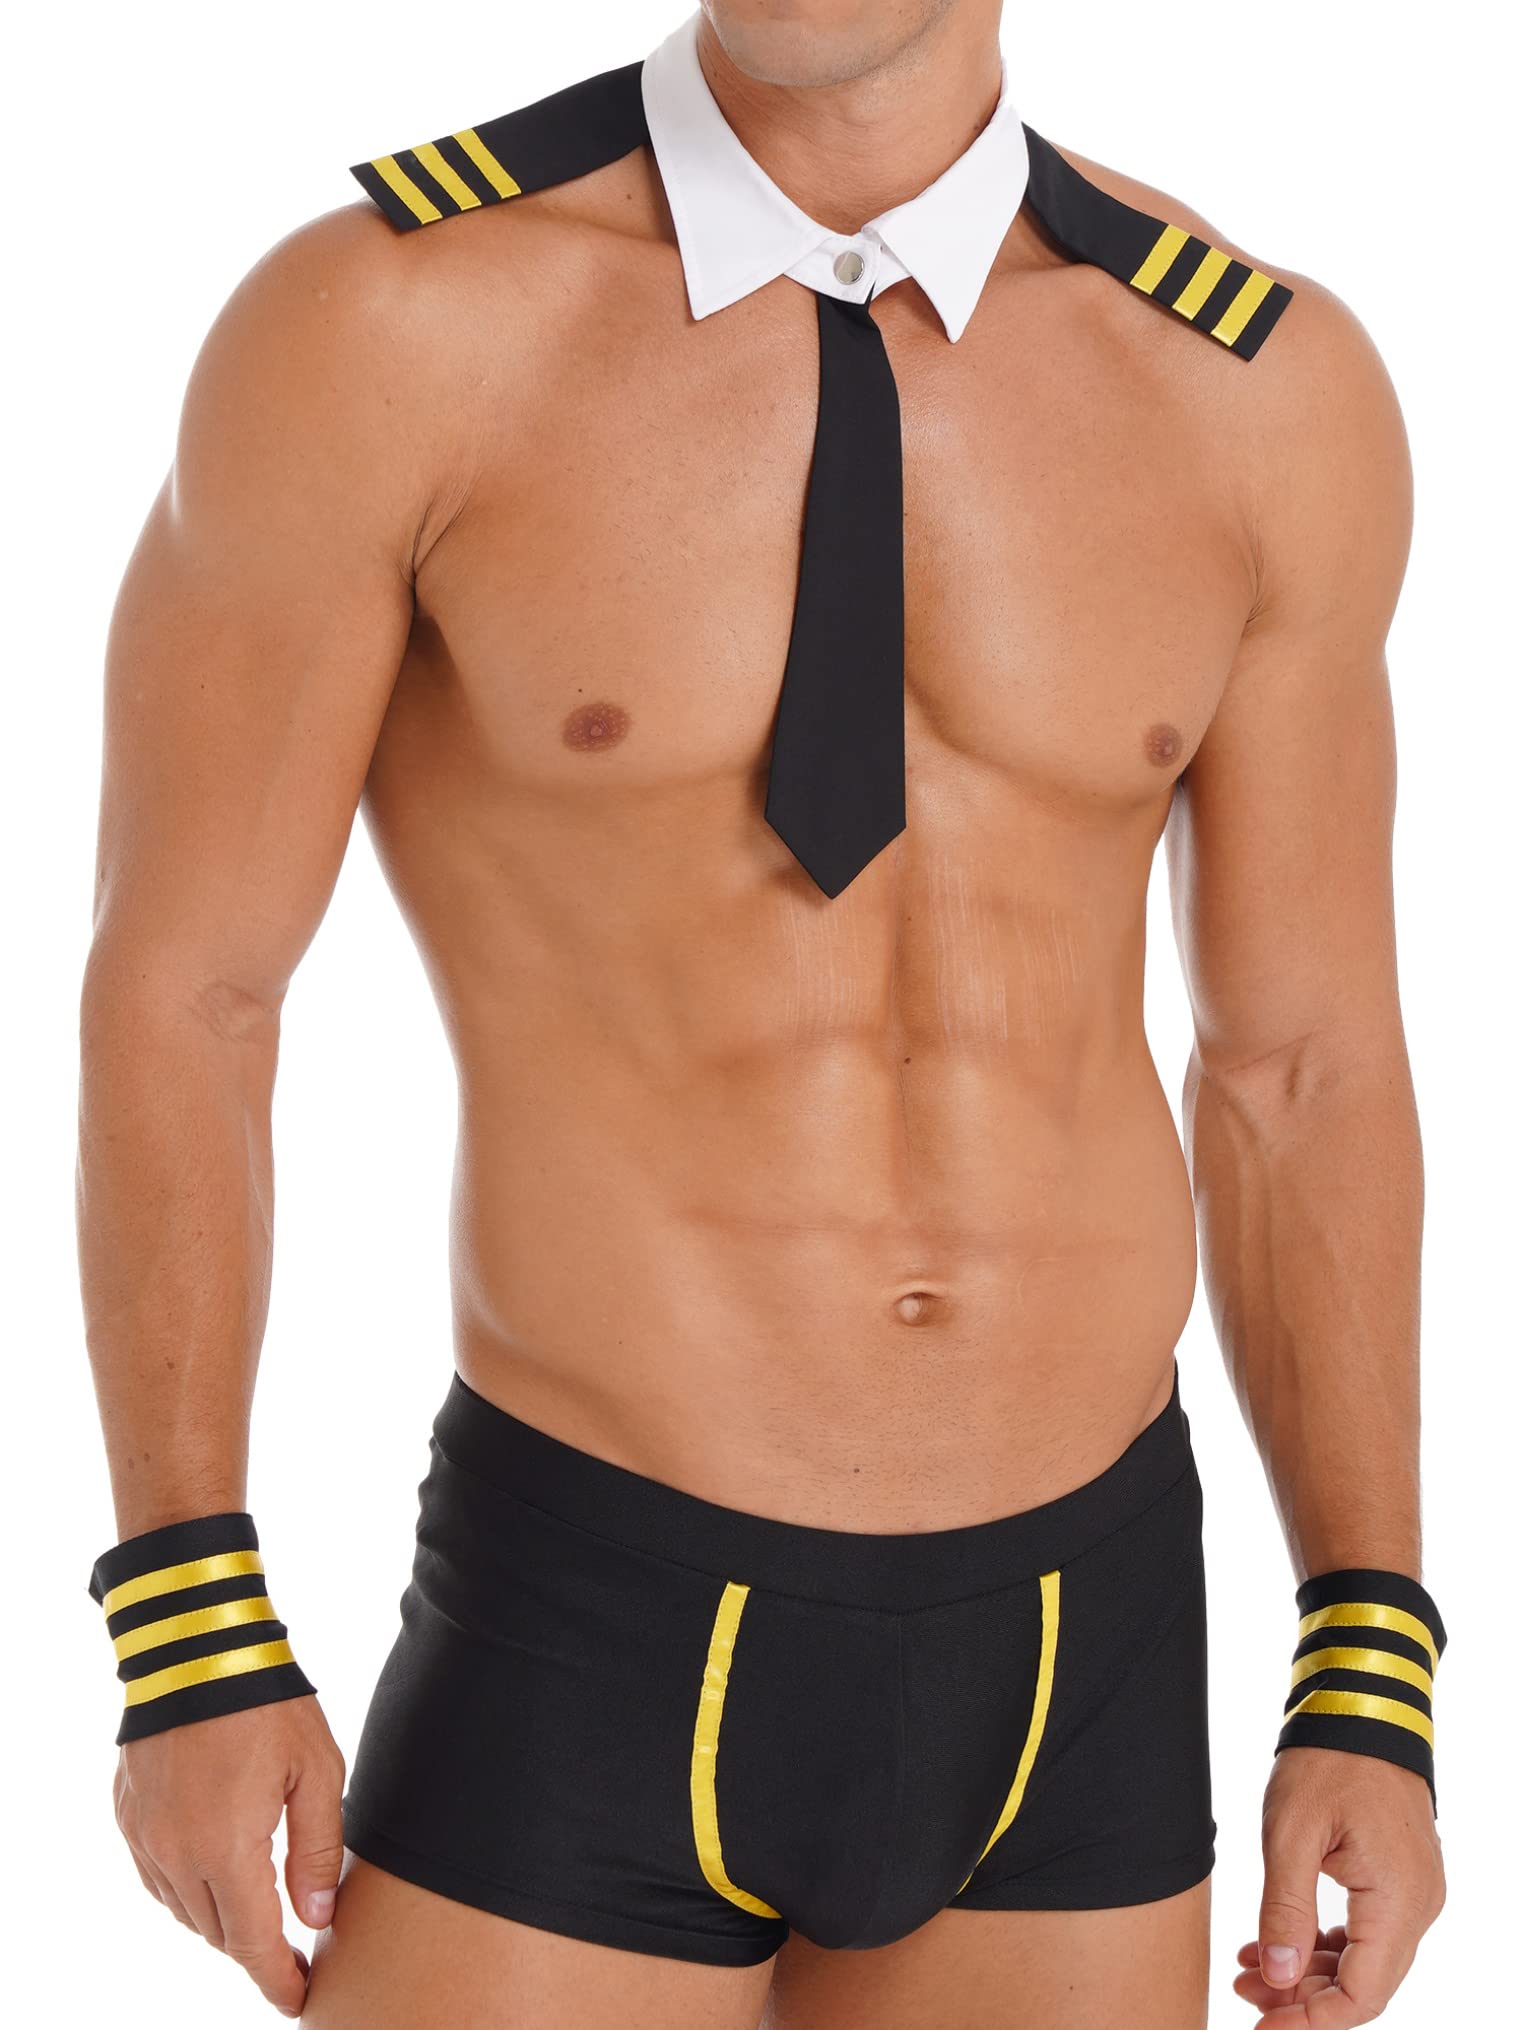 ACSUSS Men's Sailor Halloween Cosplay Costume Lingerie Outfit Boxer Briefs Collar Cuffs Set